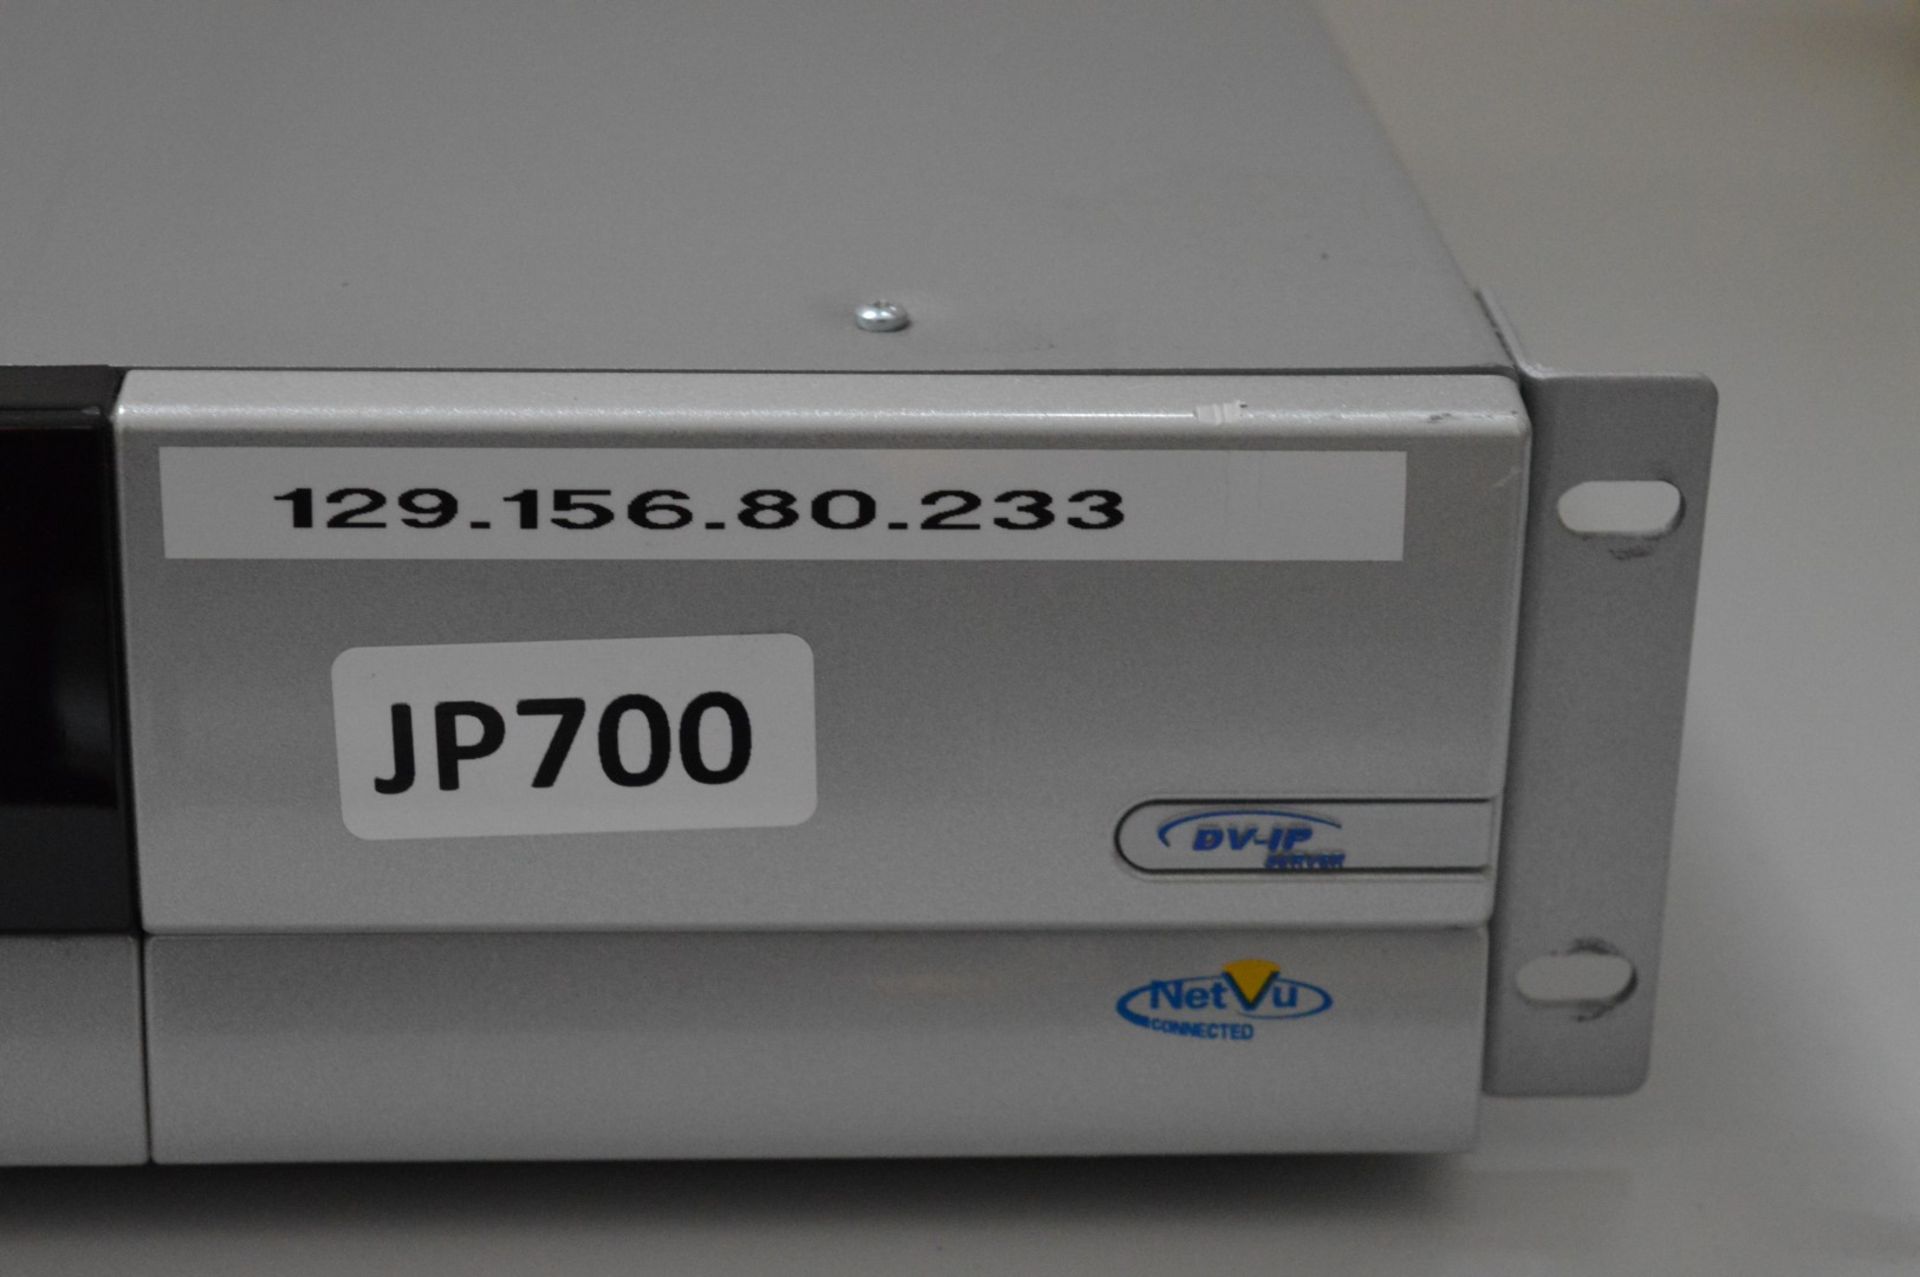 1 x Dedicated Micros CCTV Unit - Model DV-IP16D-600GB - CL270 Ref JP700 - Location: Altrincham WA14 - Image 2 of 4